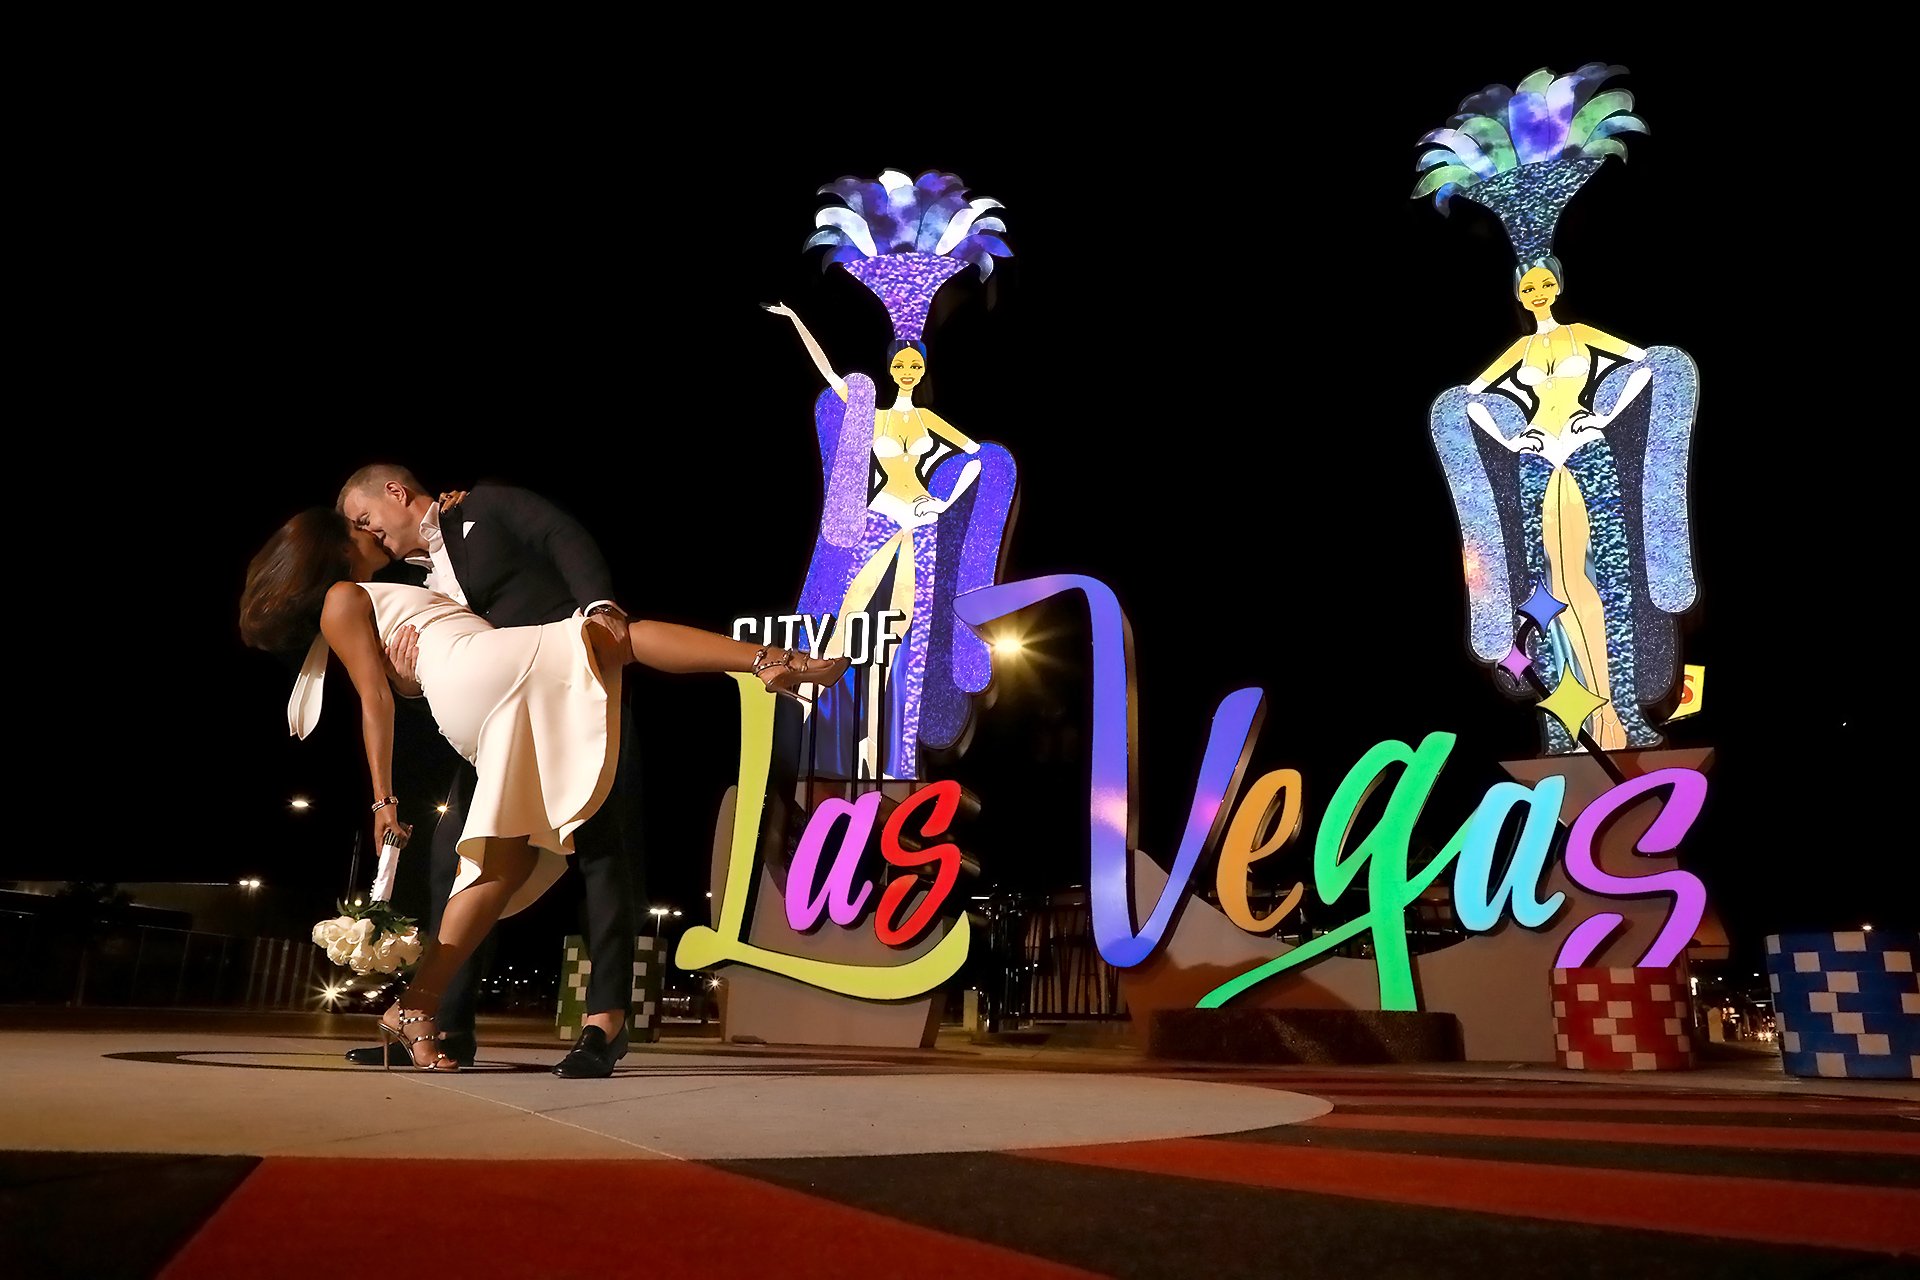 City of Las Vegas Sign